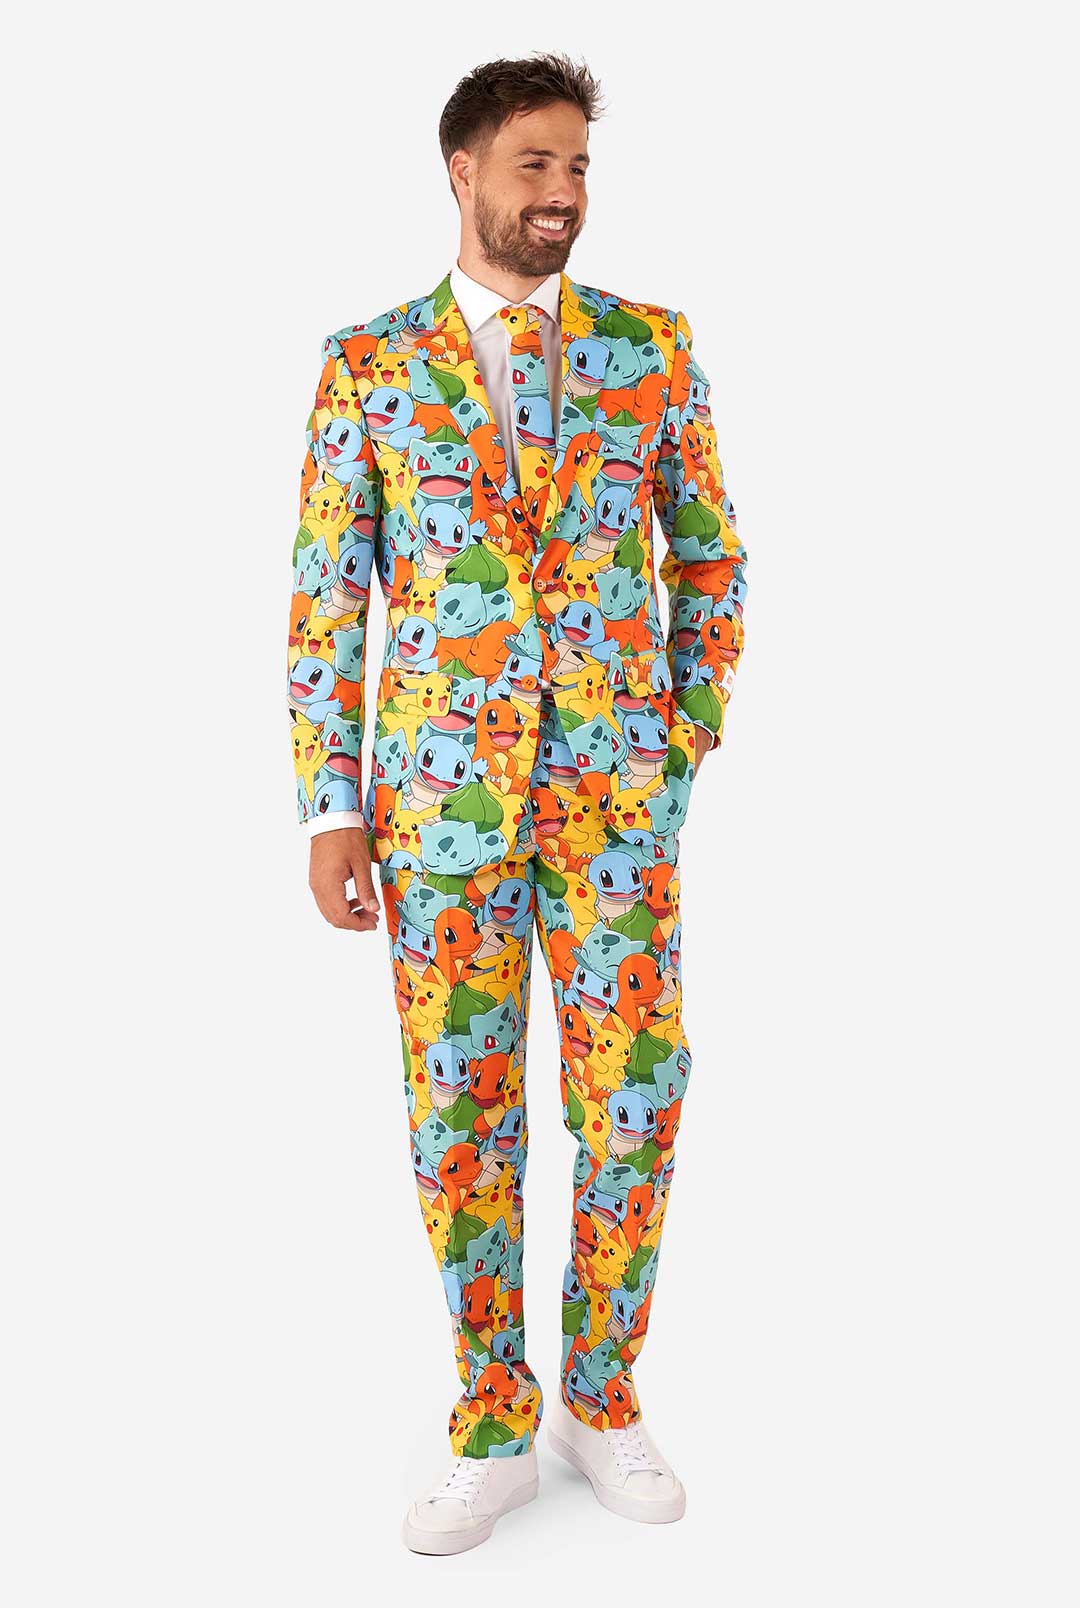 POKÉMON Men's Suit - OppoSuits